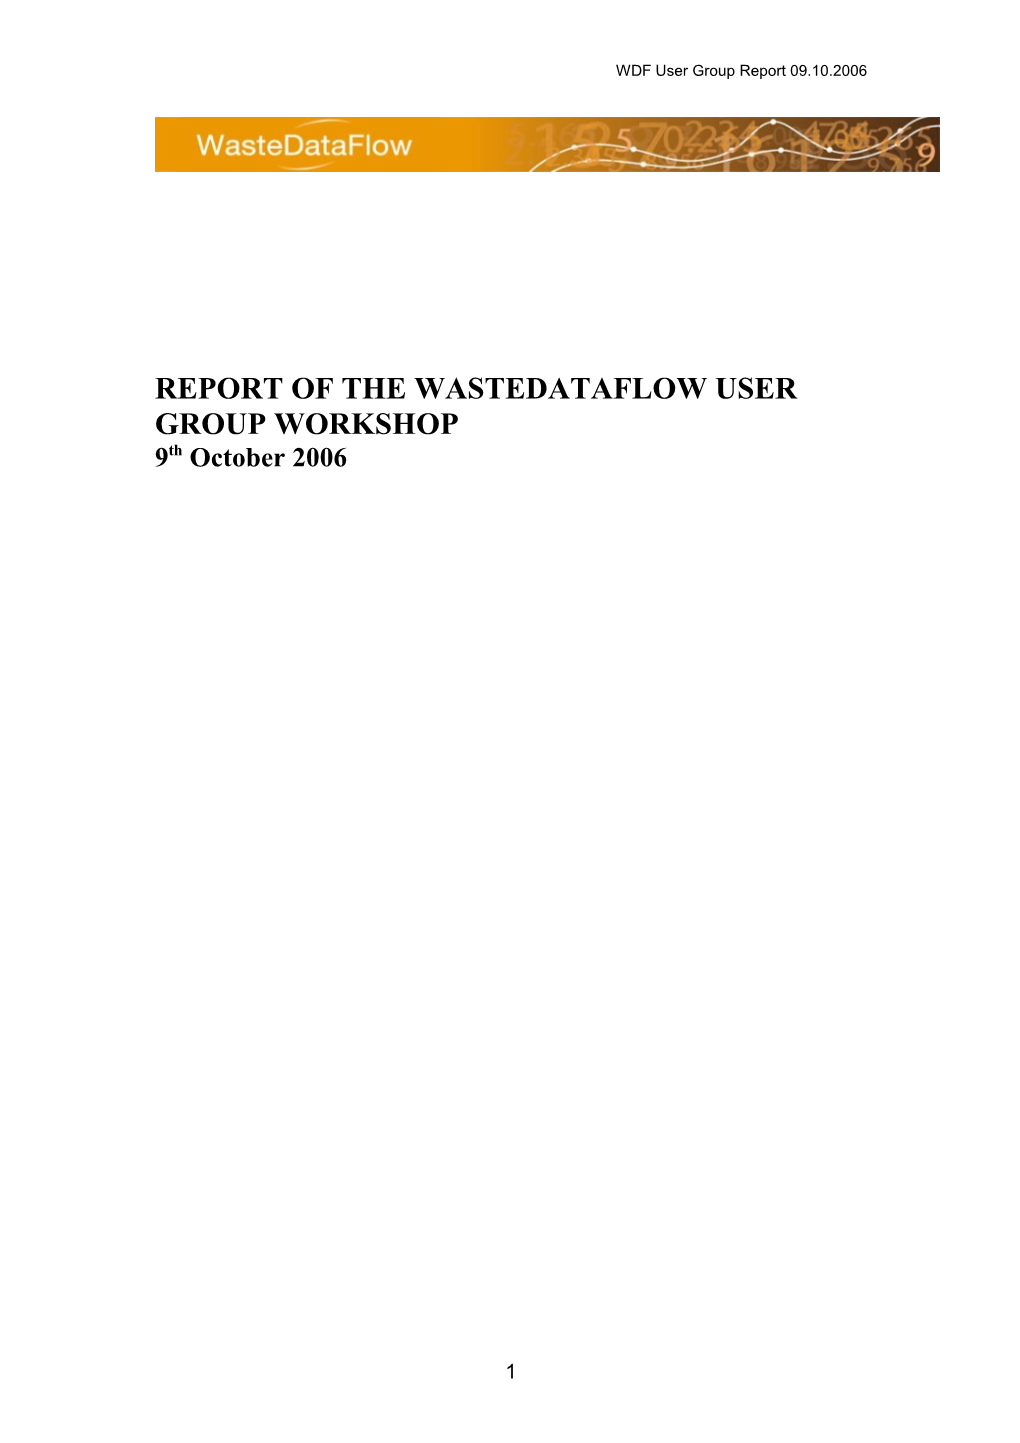 Report of the Wastedataflow User Group Workshop